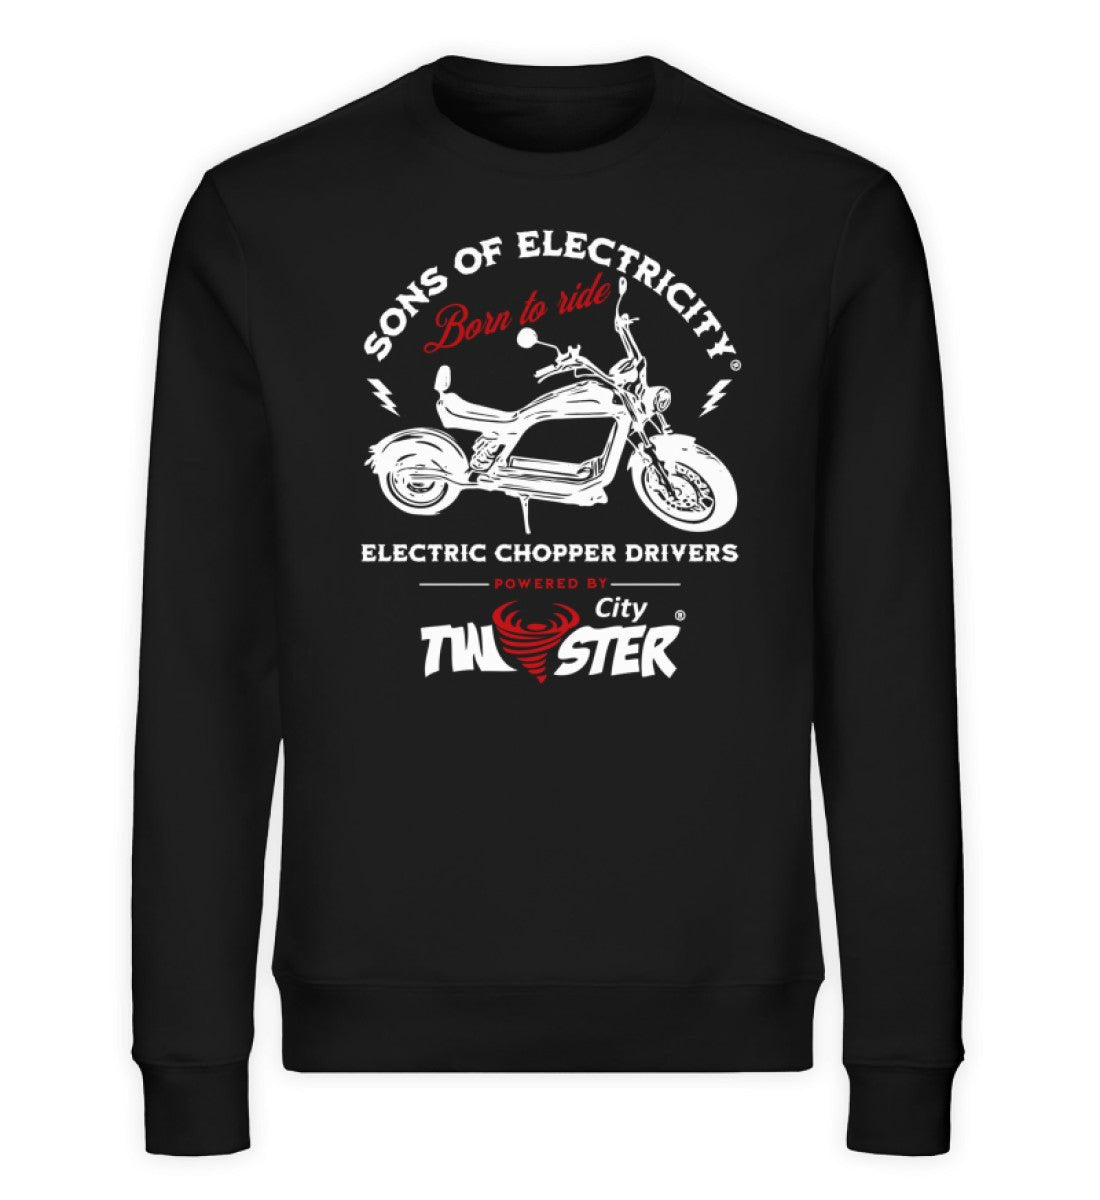 Organic Premium E-Chopper Sweatshirt: SONS OF ELECTRICITY -